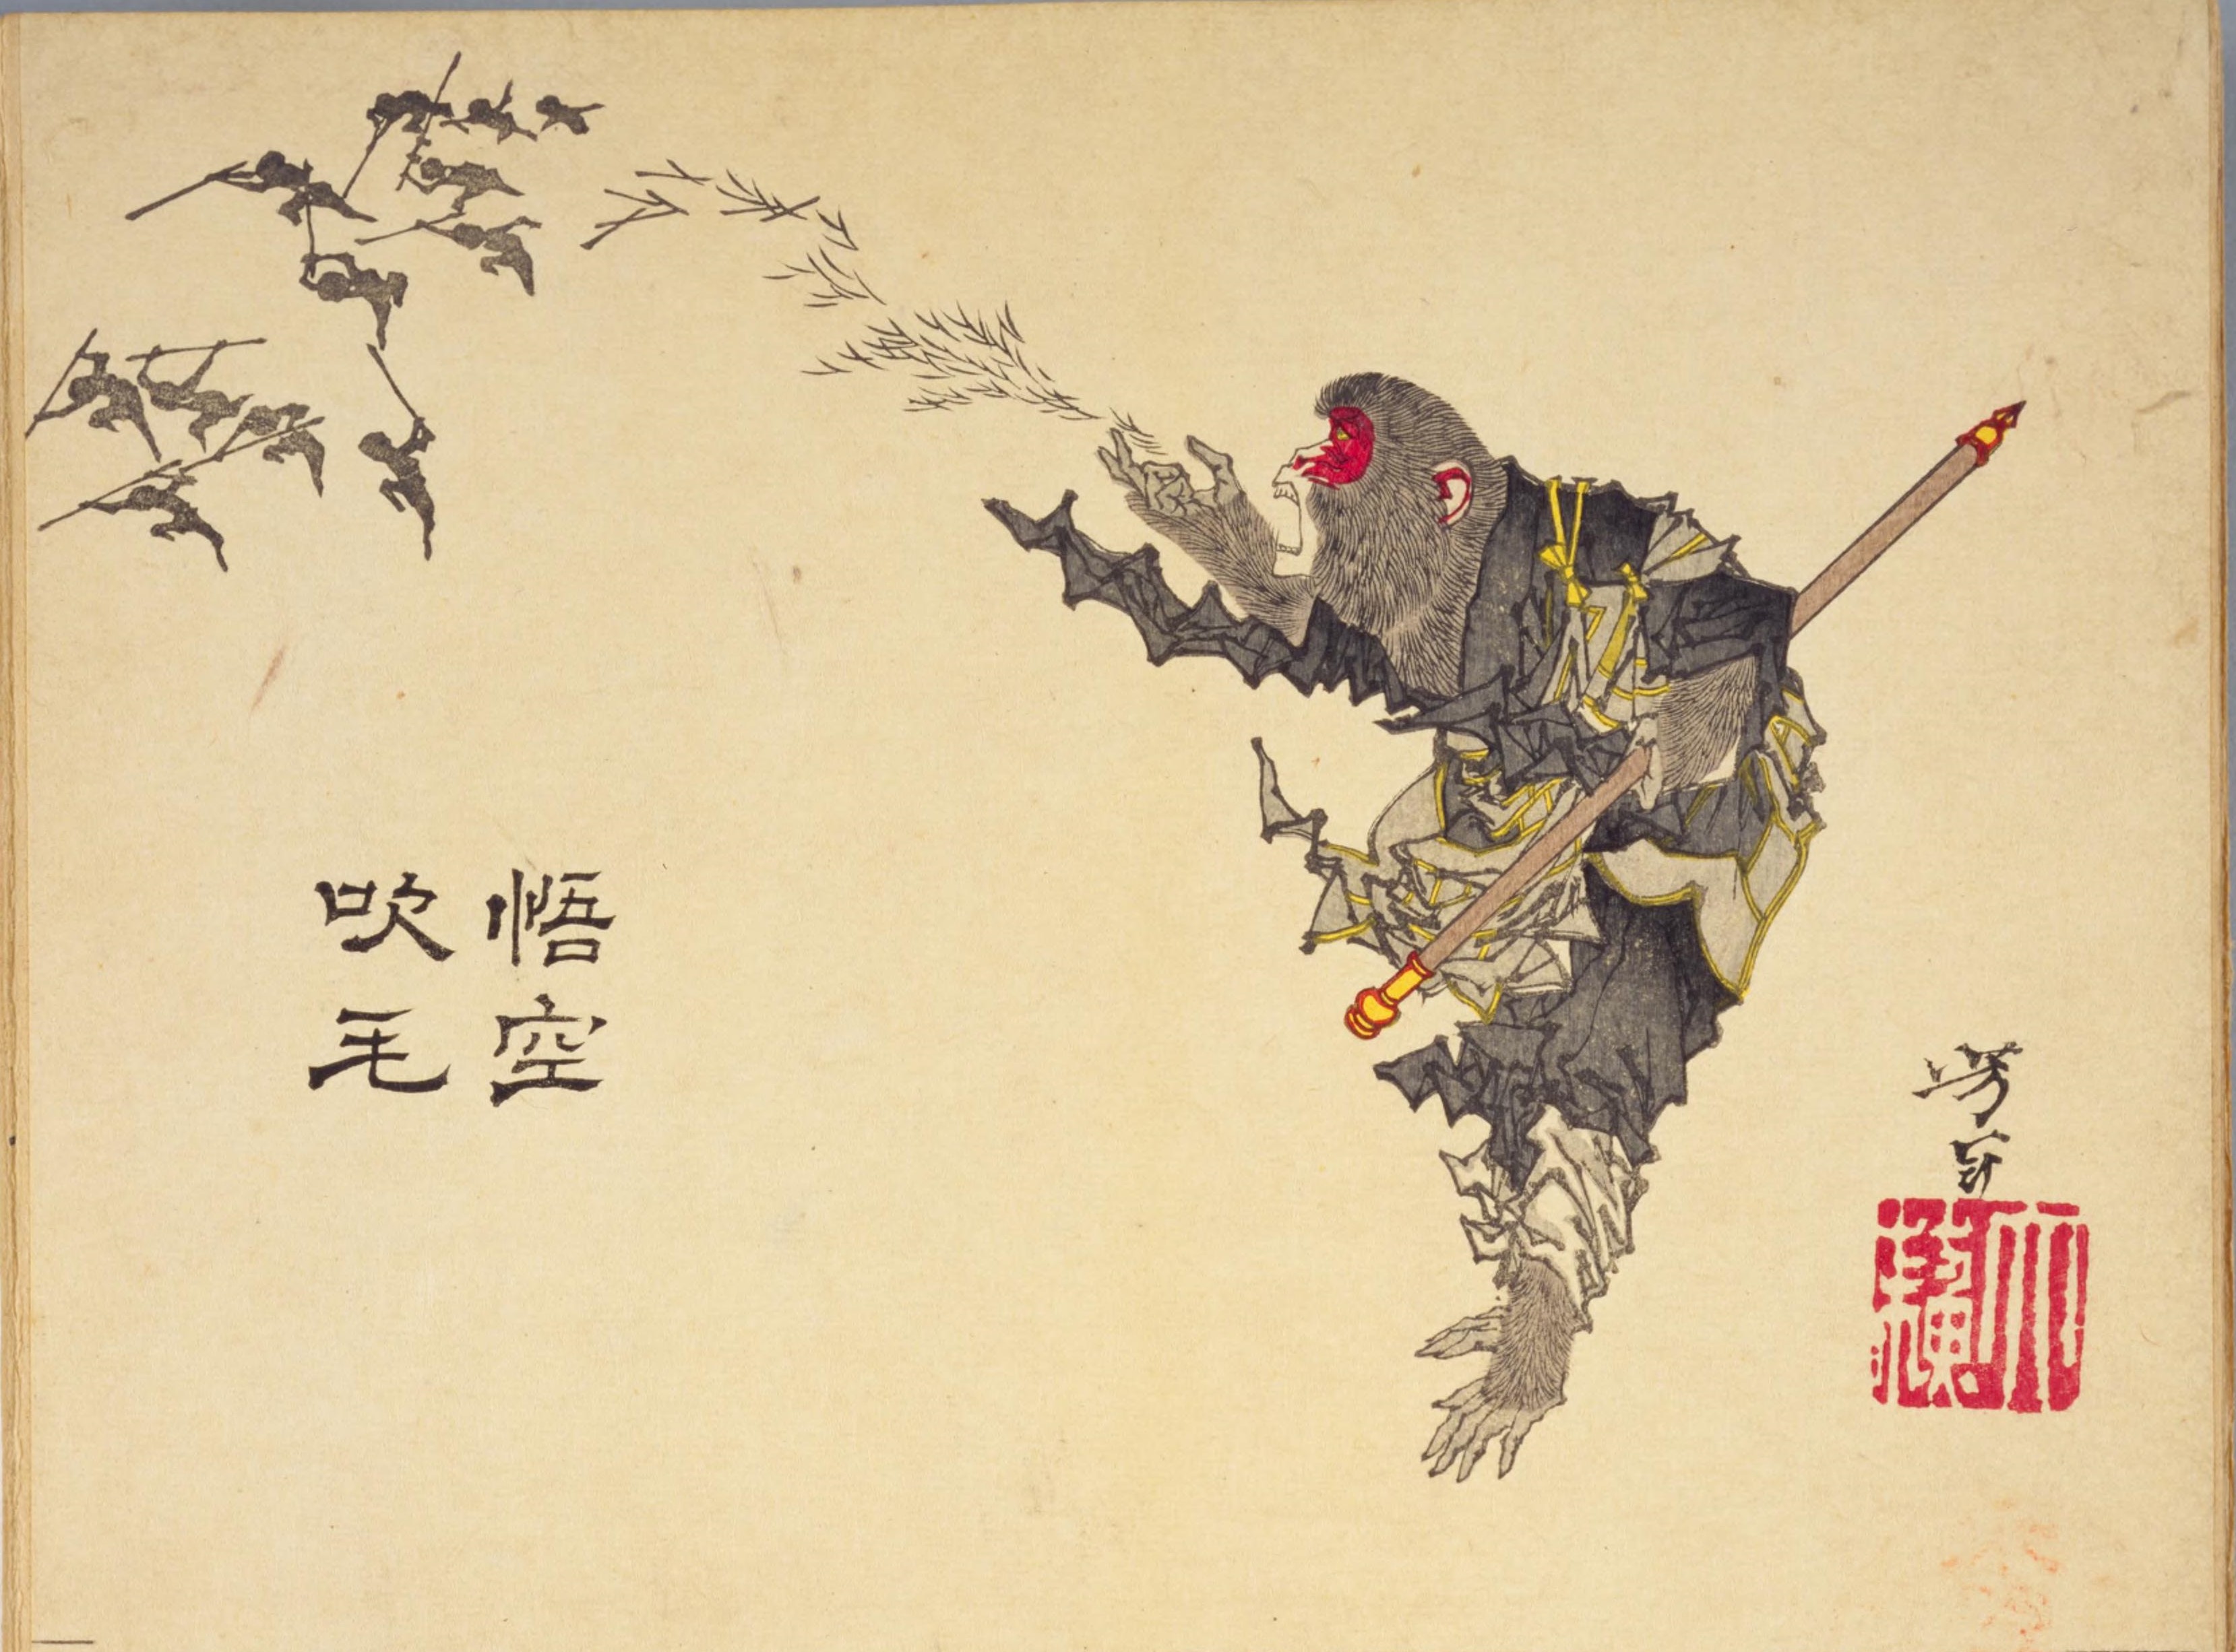 Illustration of Sun Wukong, the Monkey King